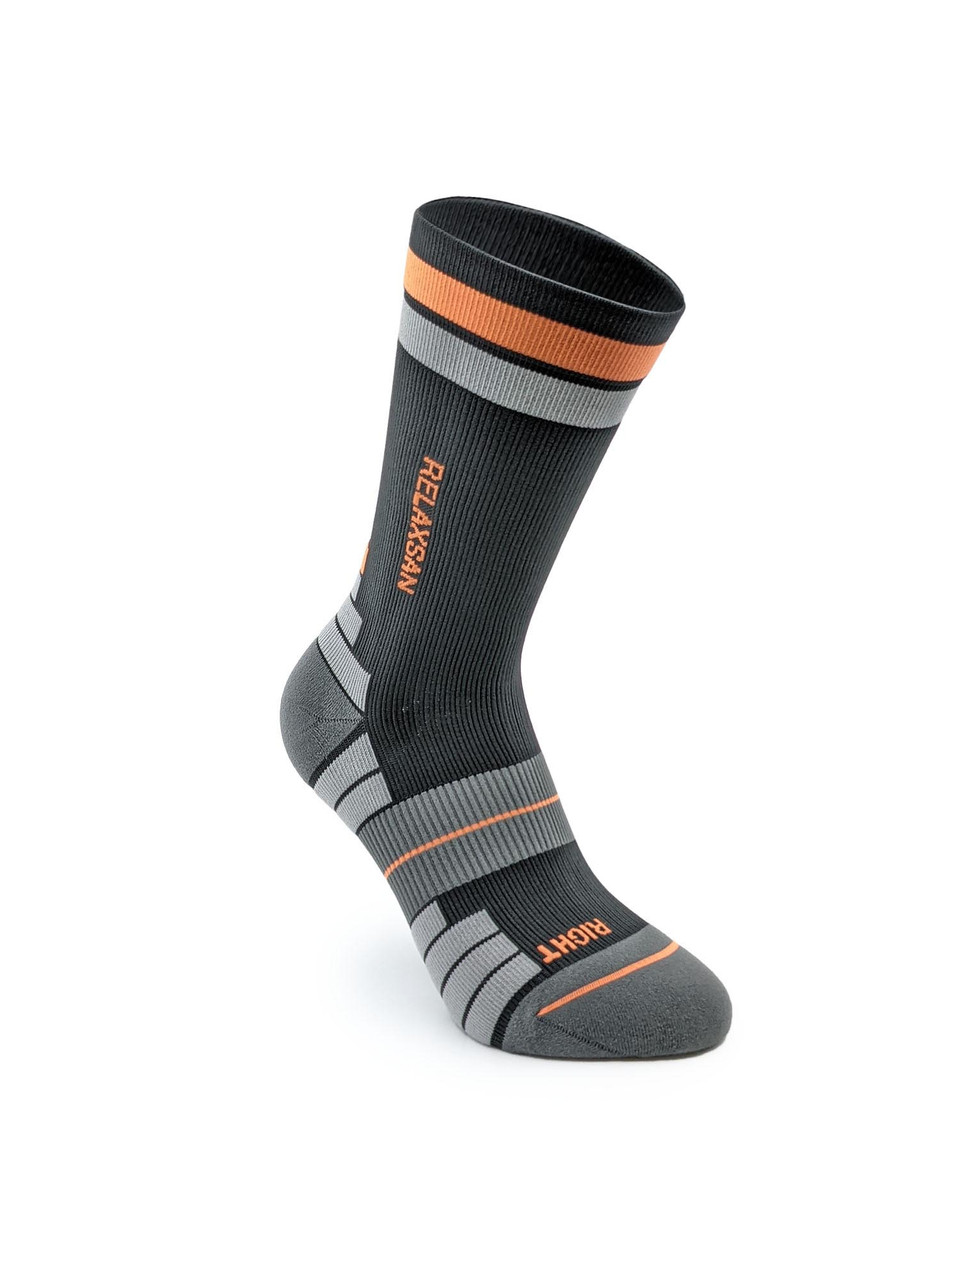 Спортивные носки UNISEX Relaxsan Sport с волокном DRYARN арт.801, фото 3